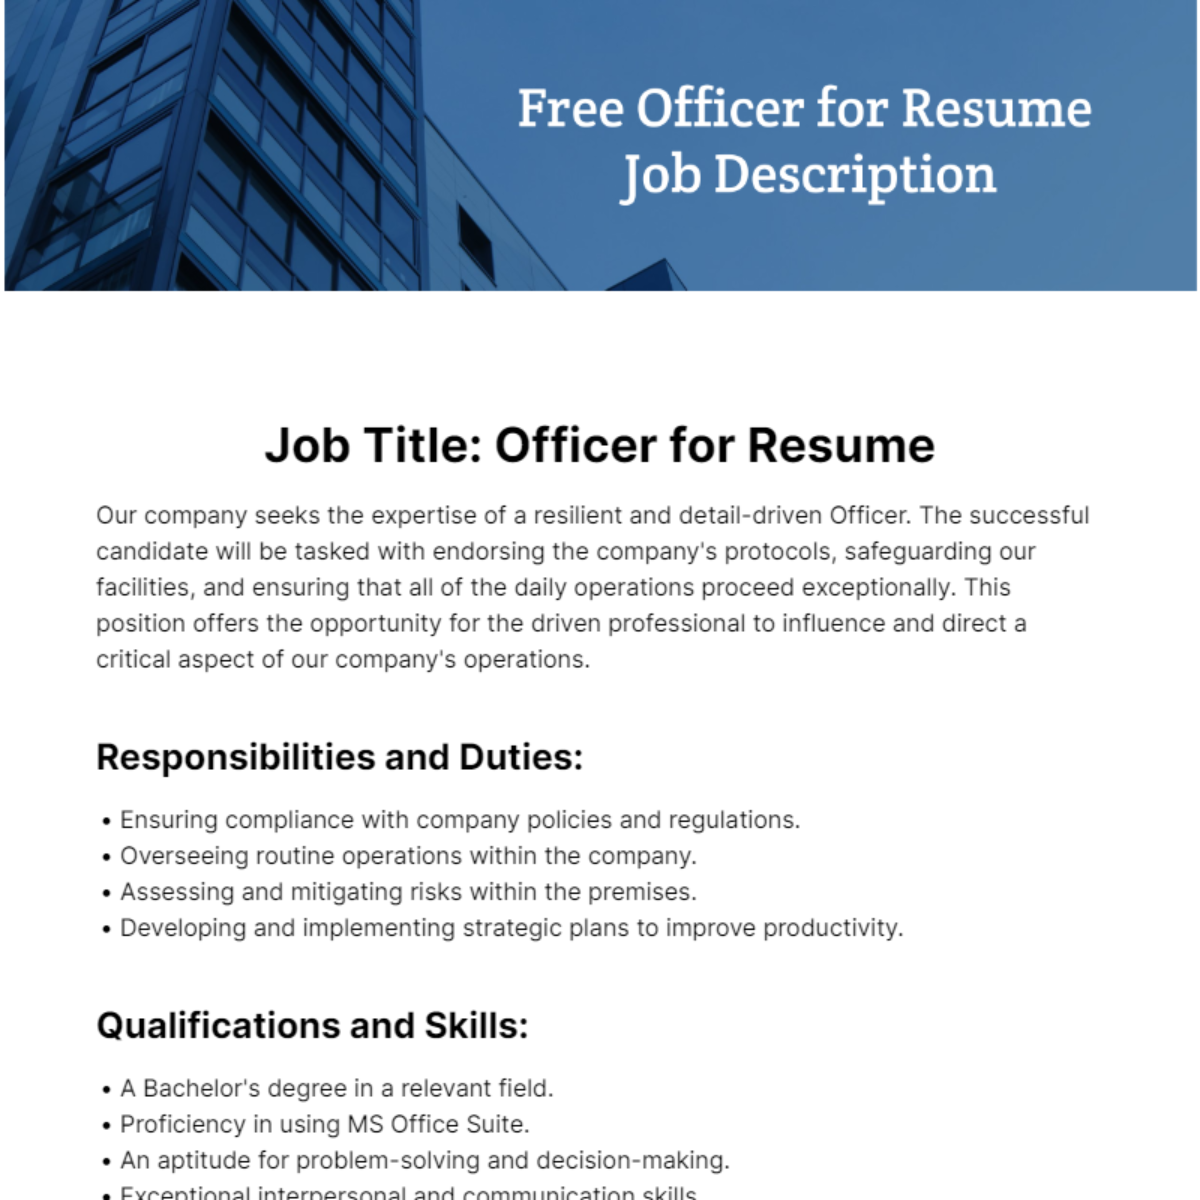 Officer Job Description for Resume Template